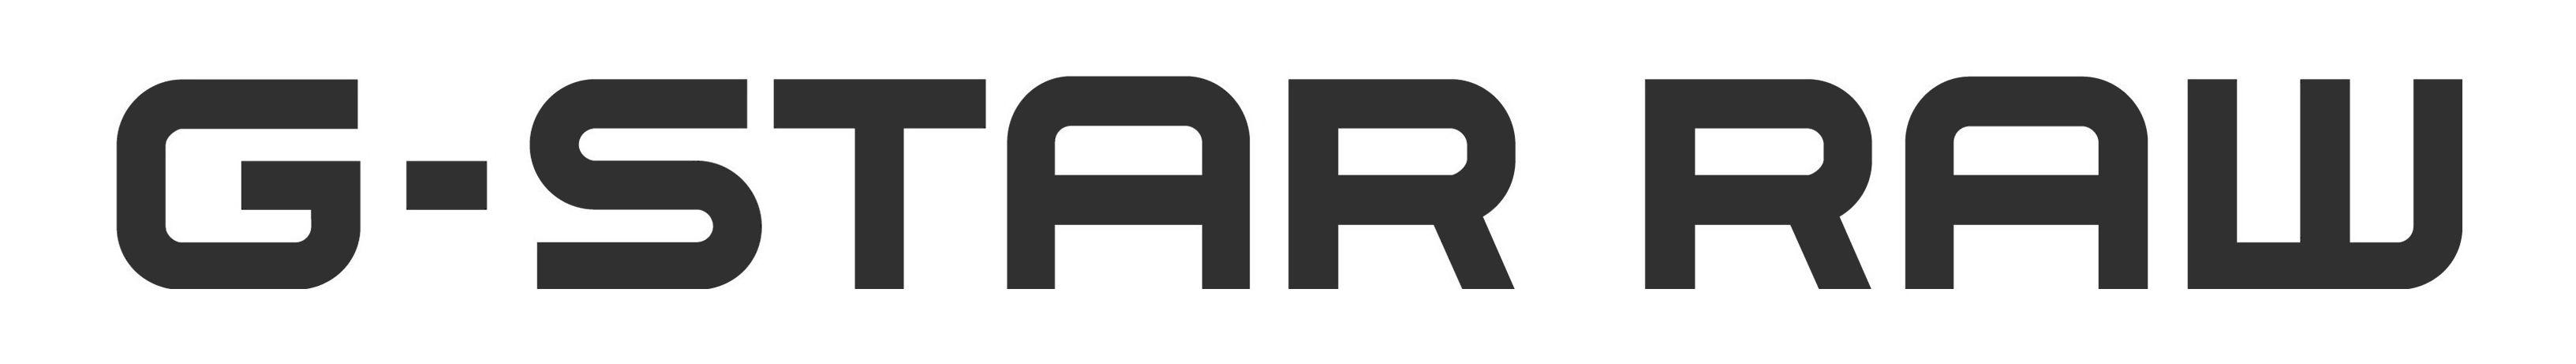 G-Star Logo - G-Star Raw – Logos Download